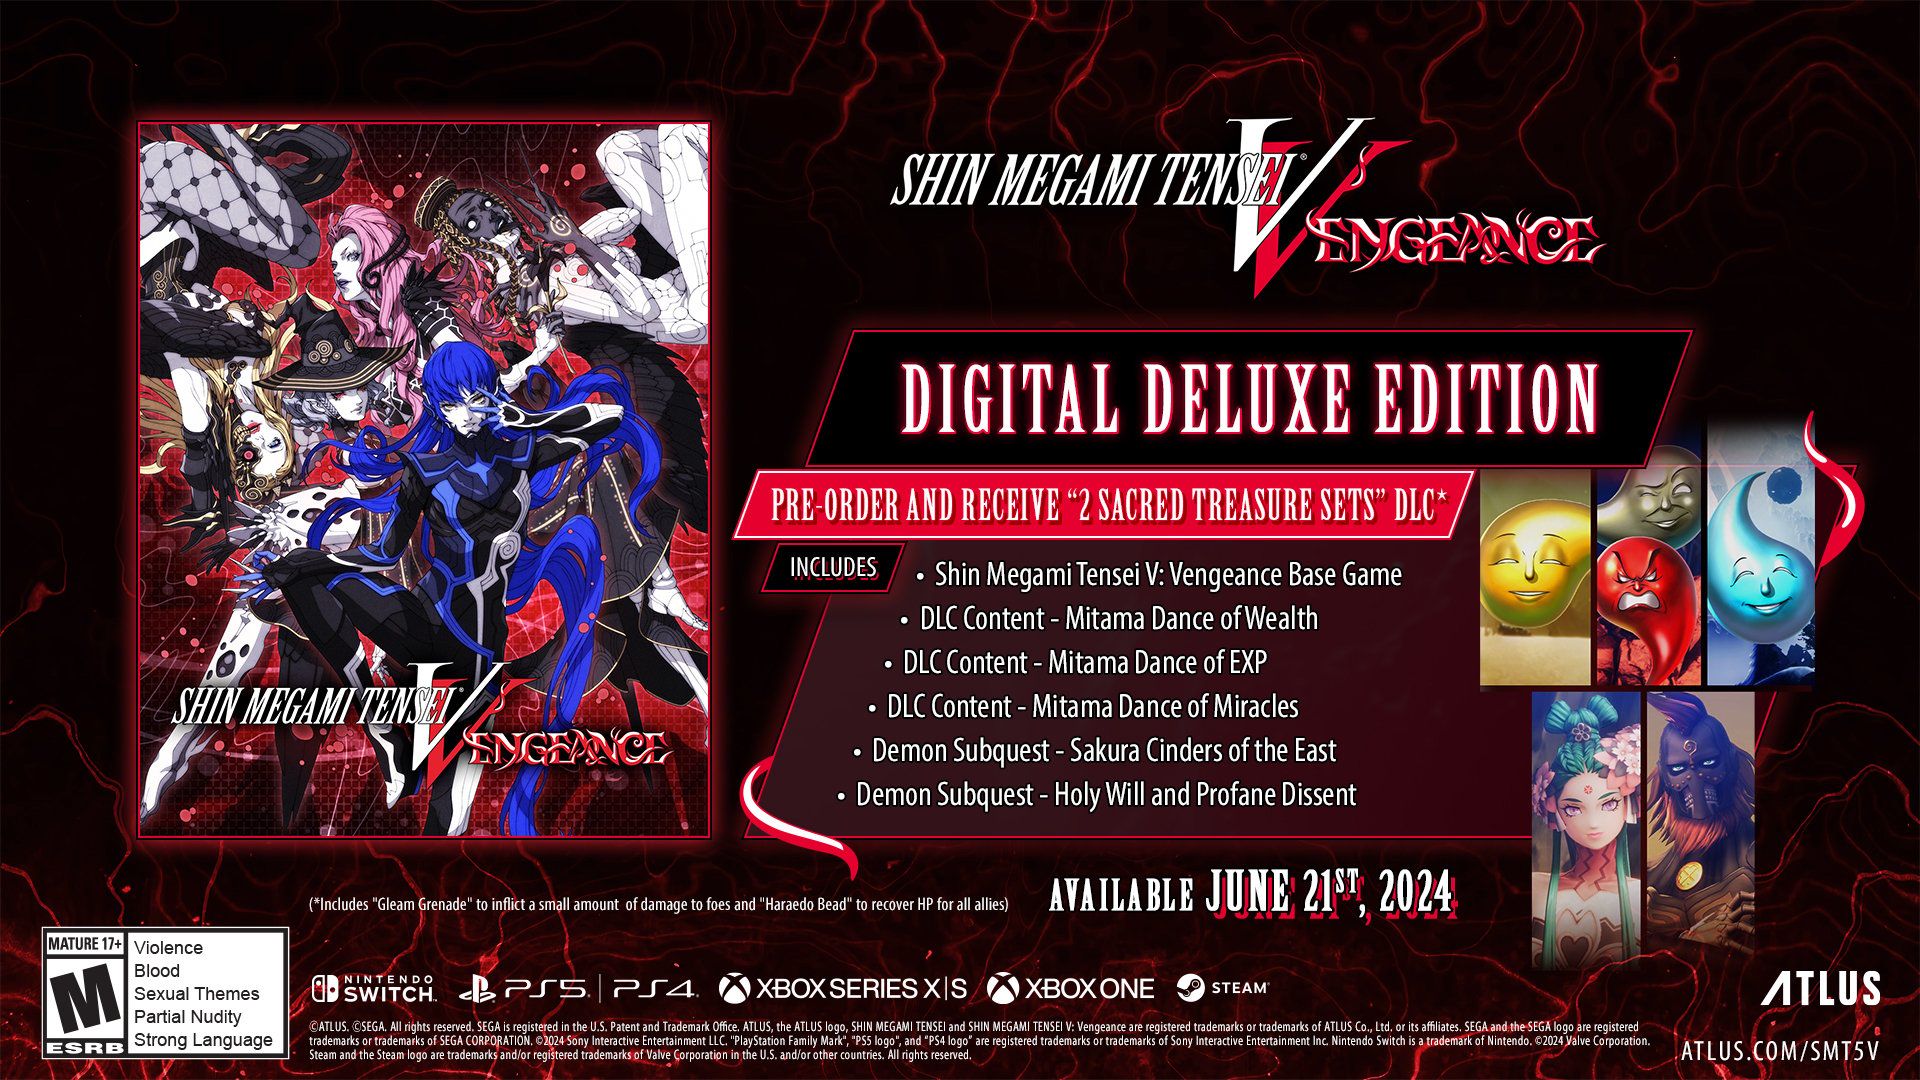 shin megami tensei 5 vengeance digital deluxe edition details